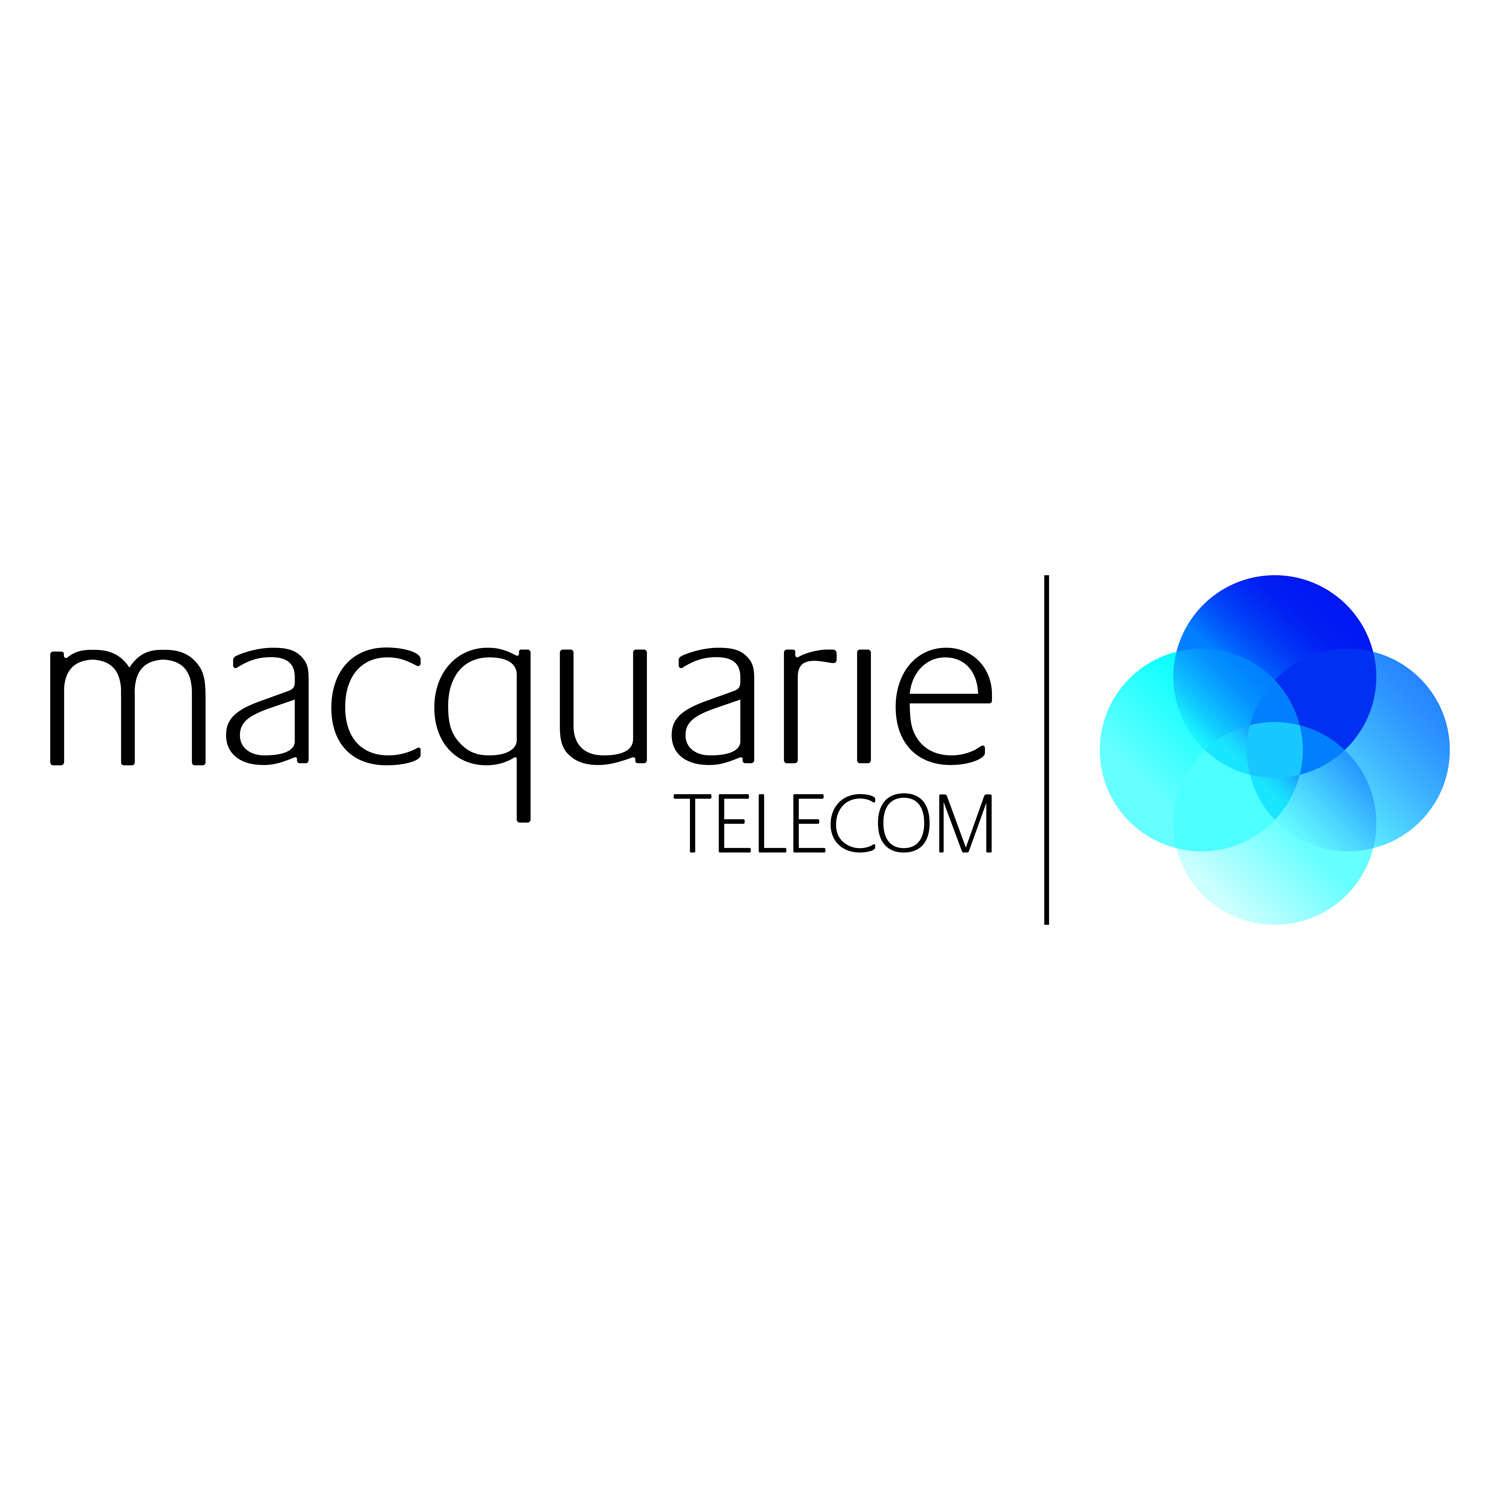 Macquarie Telecom Logo.jpg